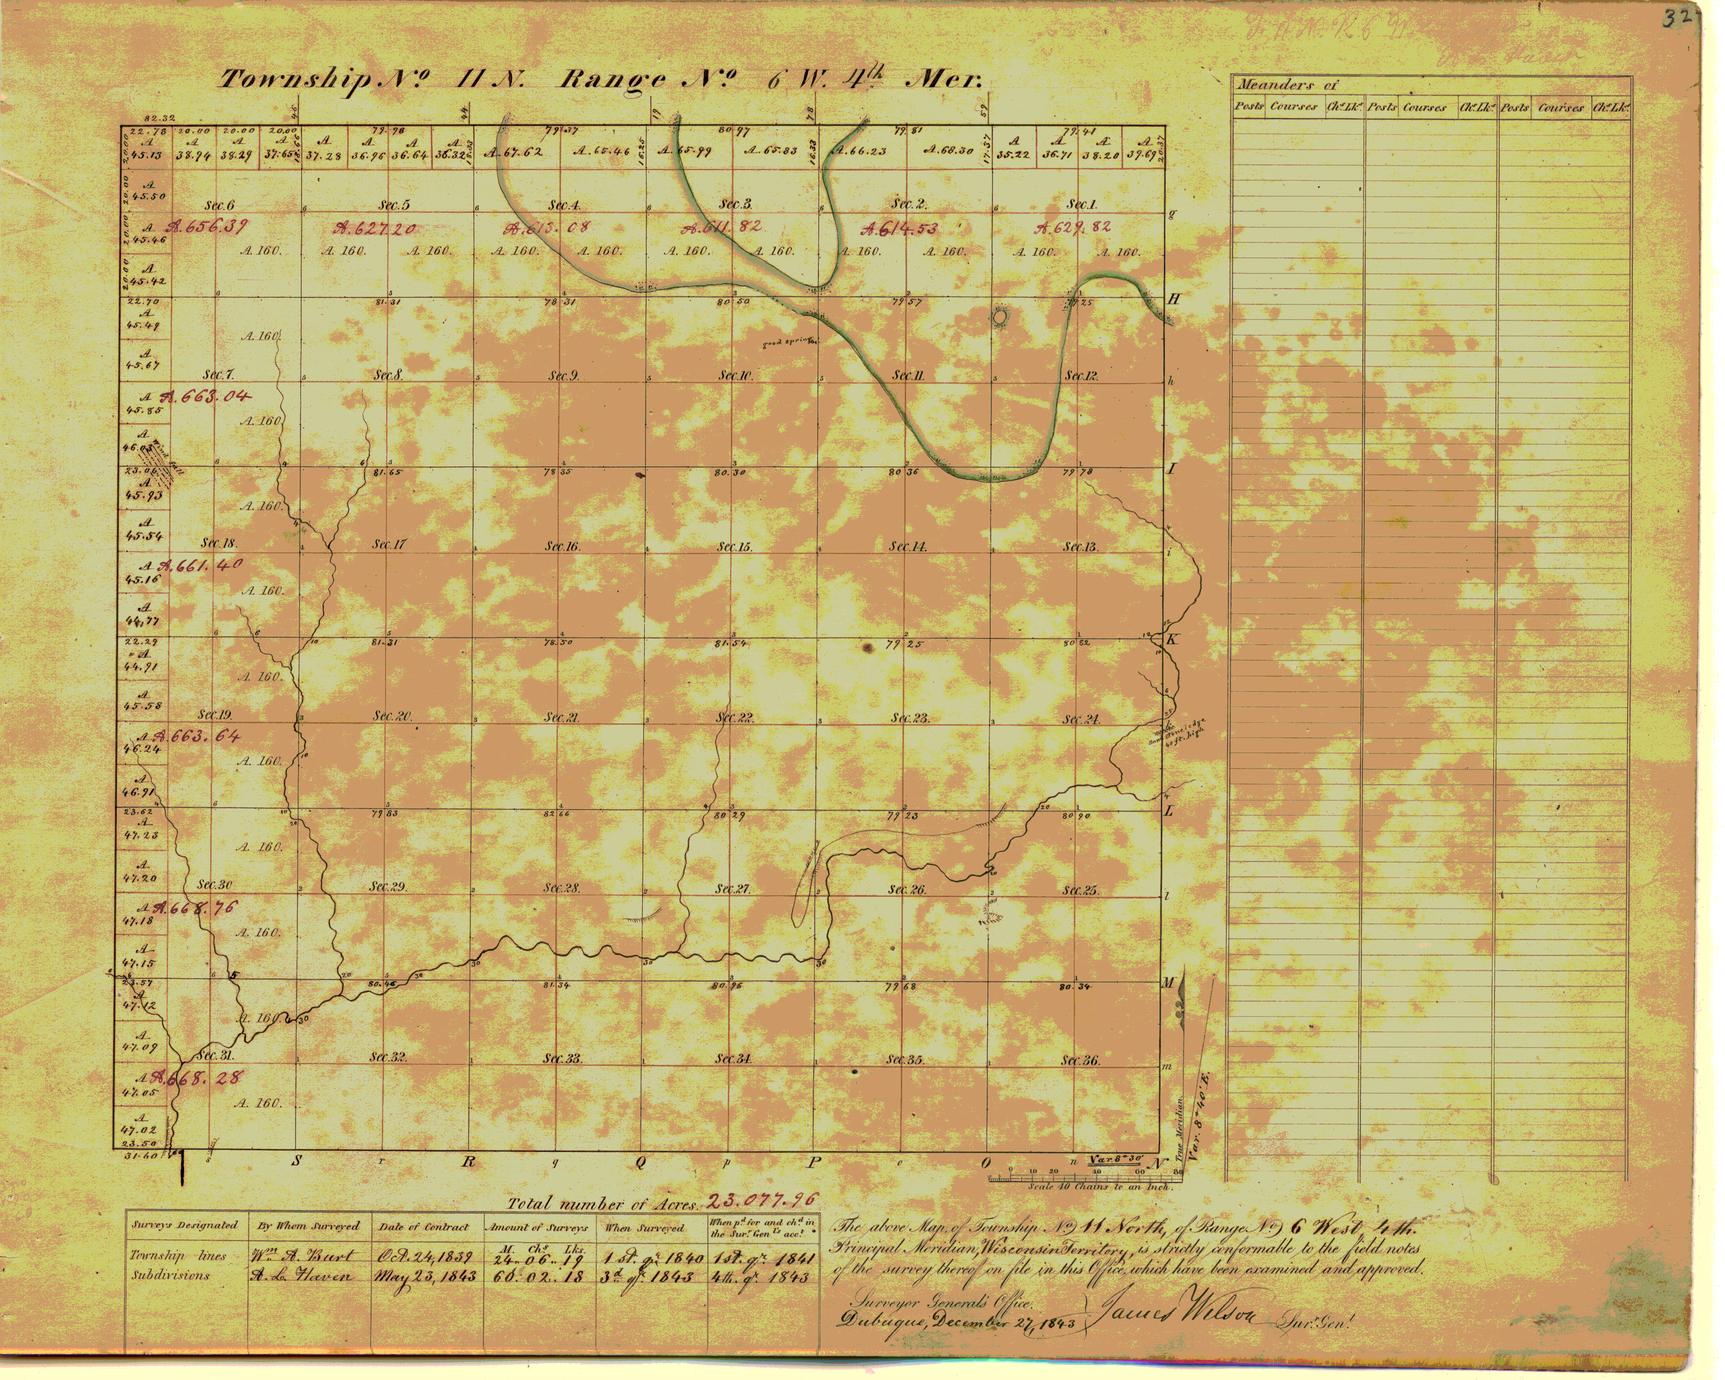 [Public Land Survey System map: Wisconsin Township 11 North, Range 06 West]